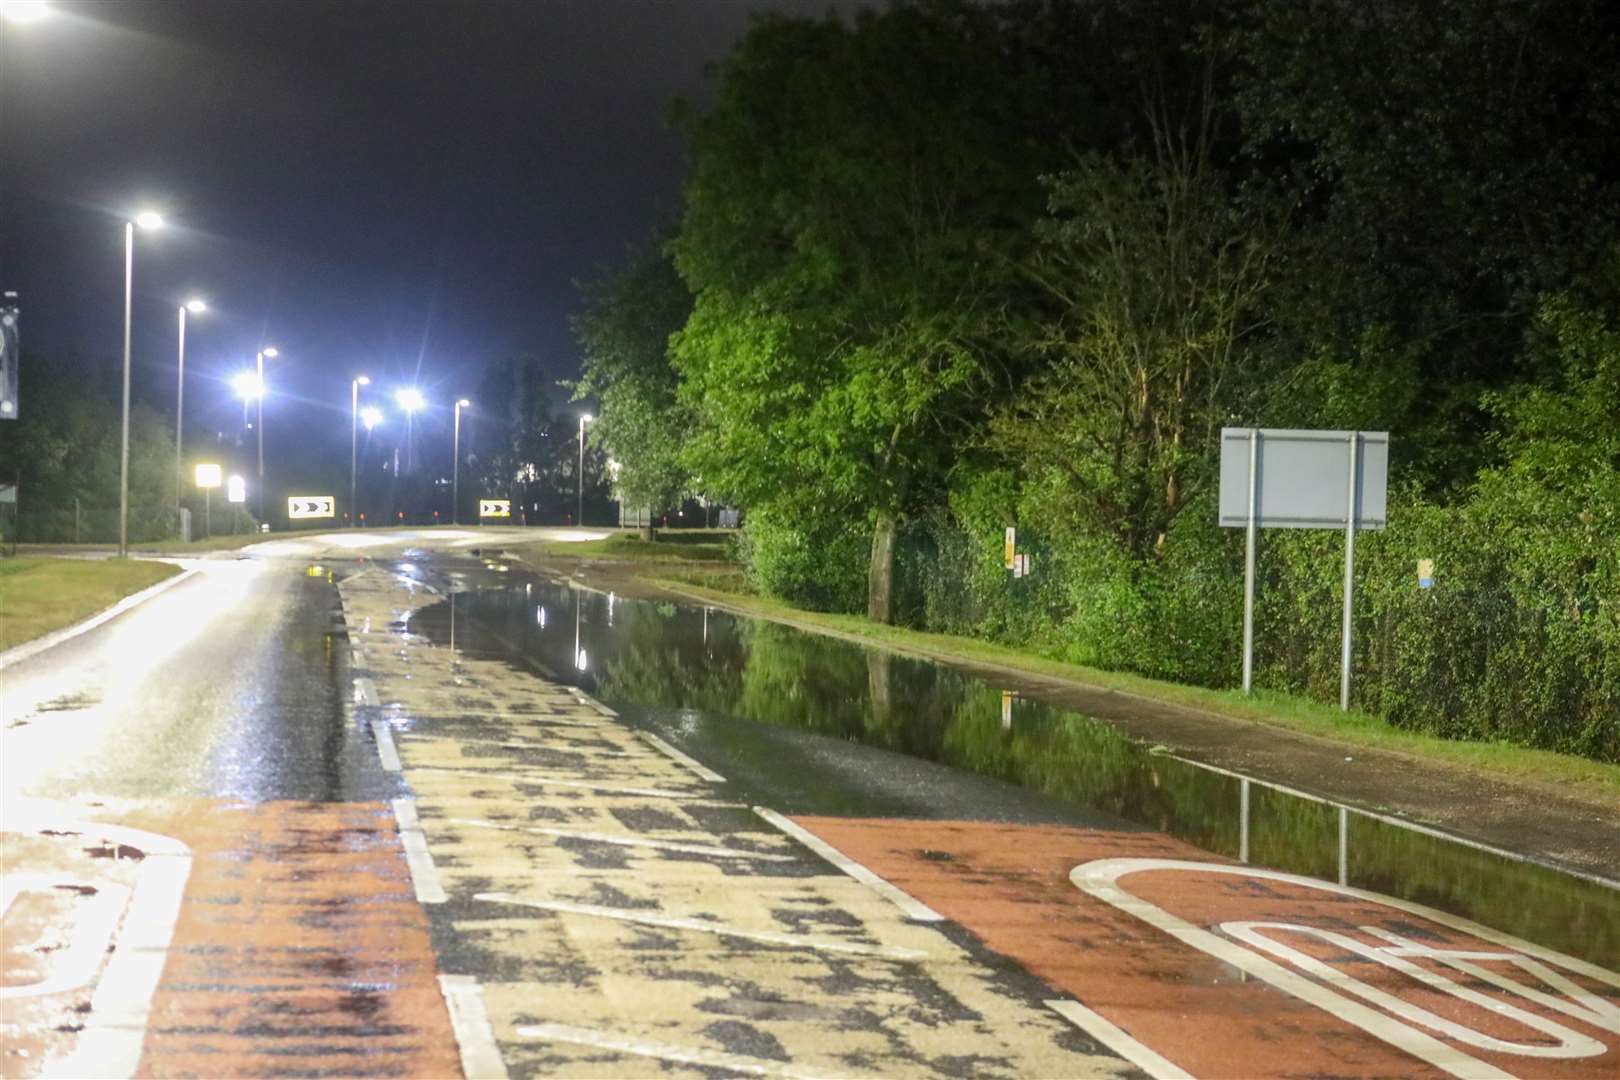 Water gathered on surrounding roads following the heavy rainfall. Pic: UKNIP